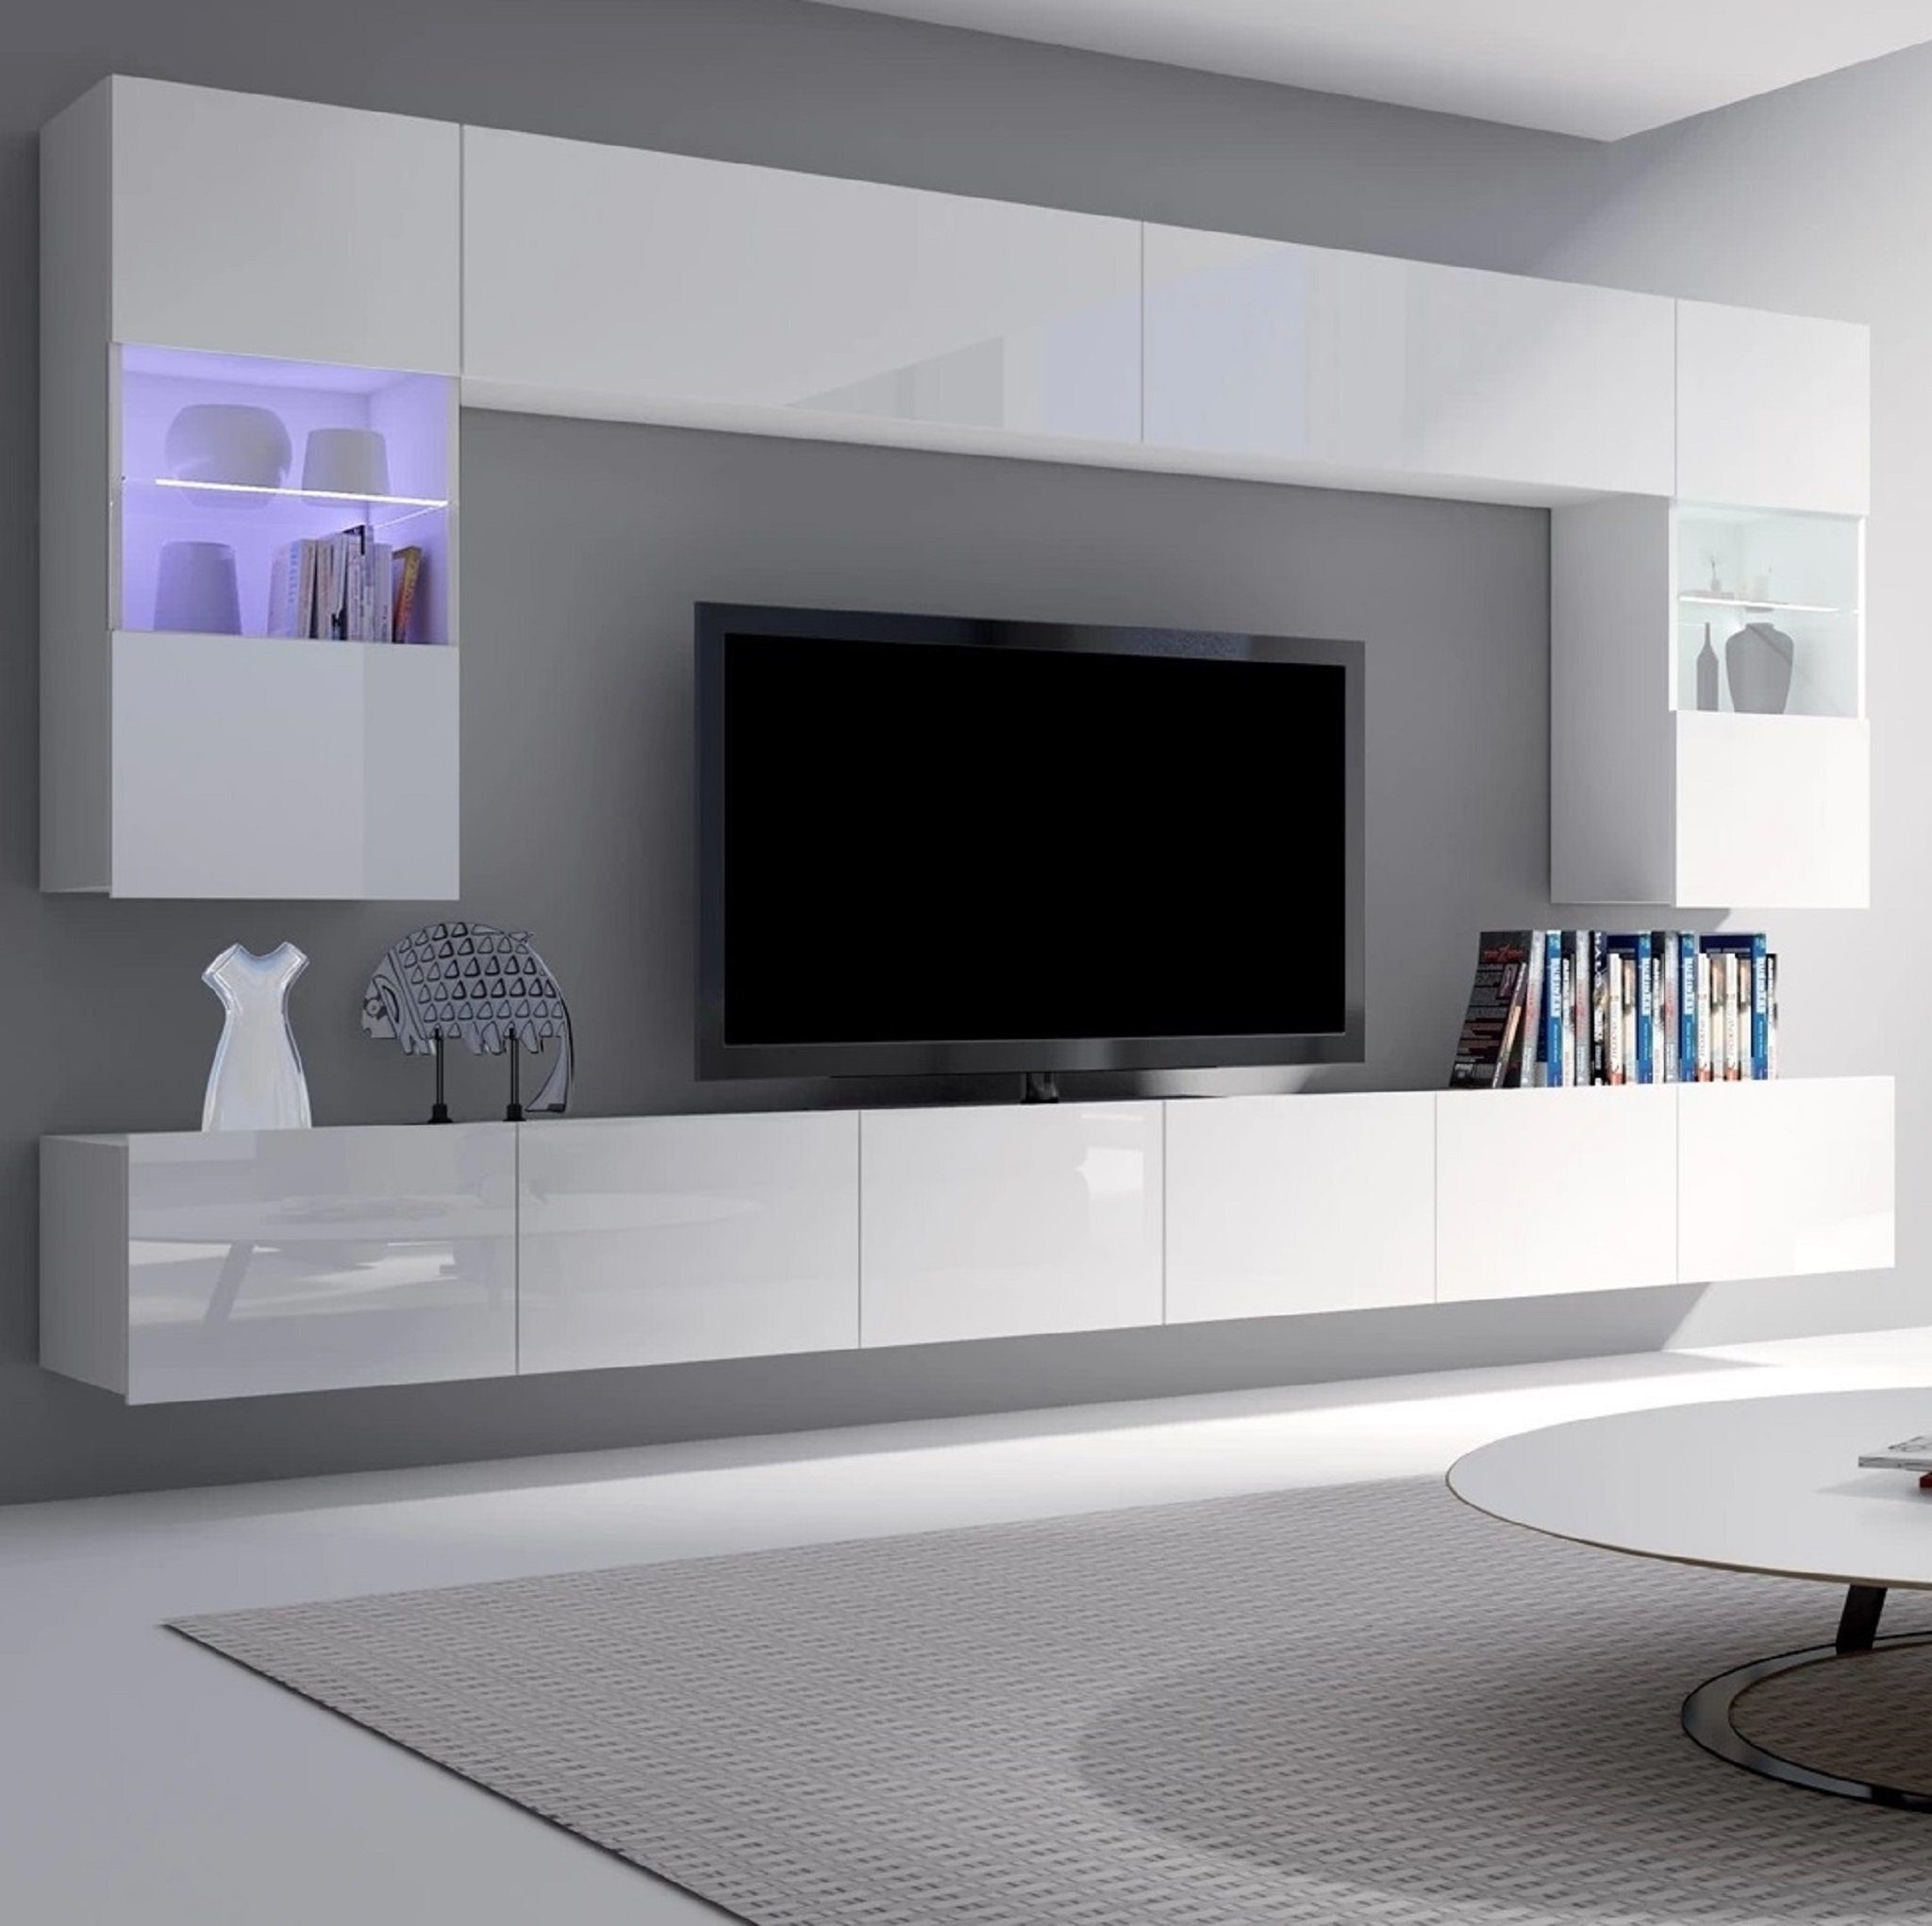 Furnix TV-Wand PUNE 1 Mediawand Möbelwand Wohnwand 6-teilig Farbauswahl, geräumig, 300 cm breit, ohne LED